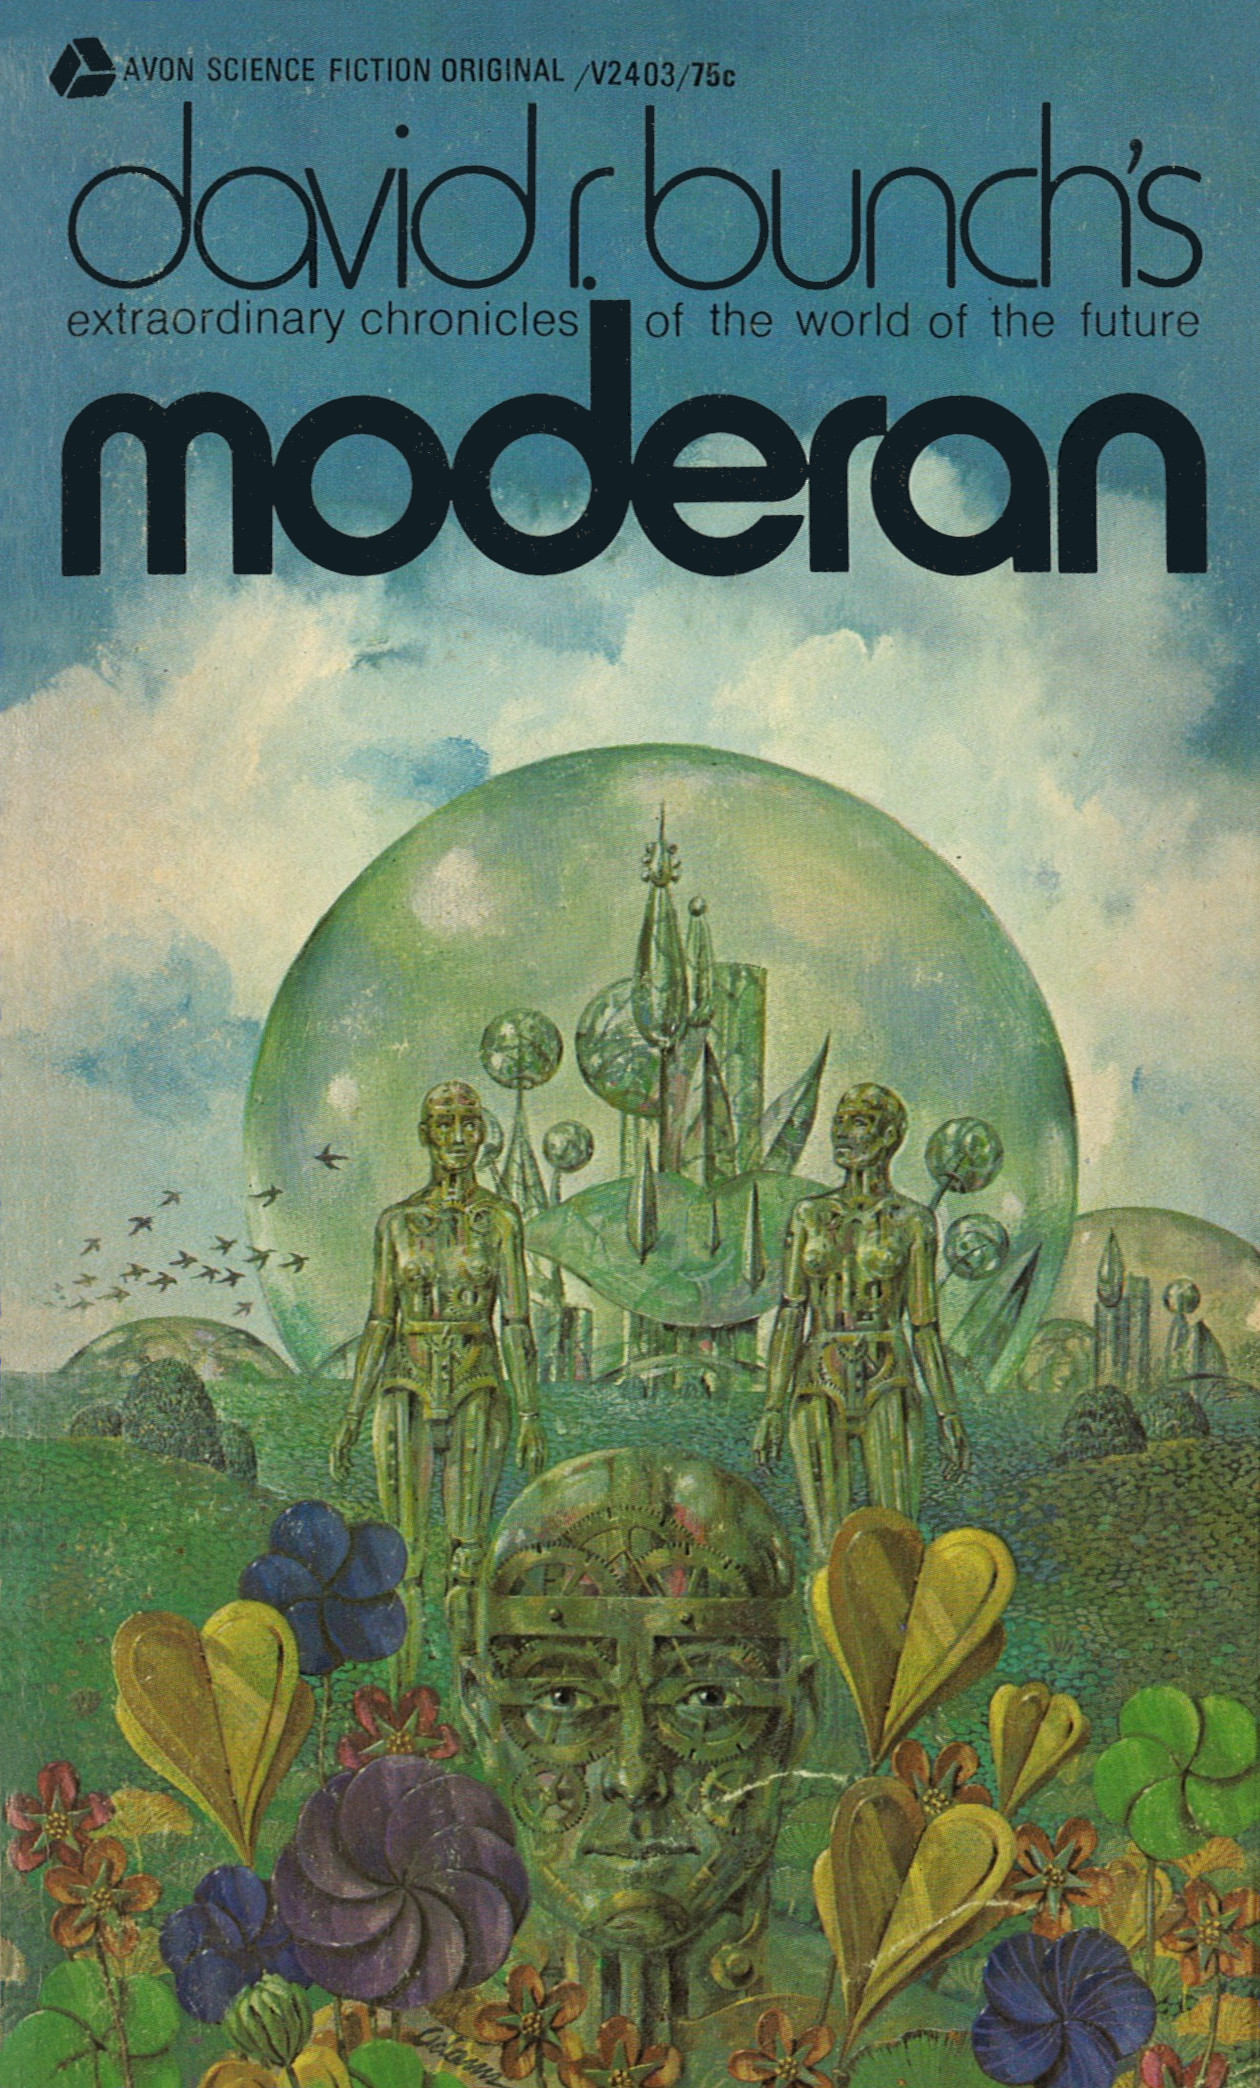 David R. Bunch: Moderan. (1971, Avon Books)